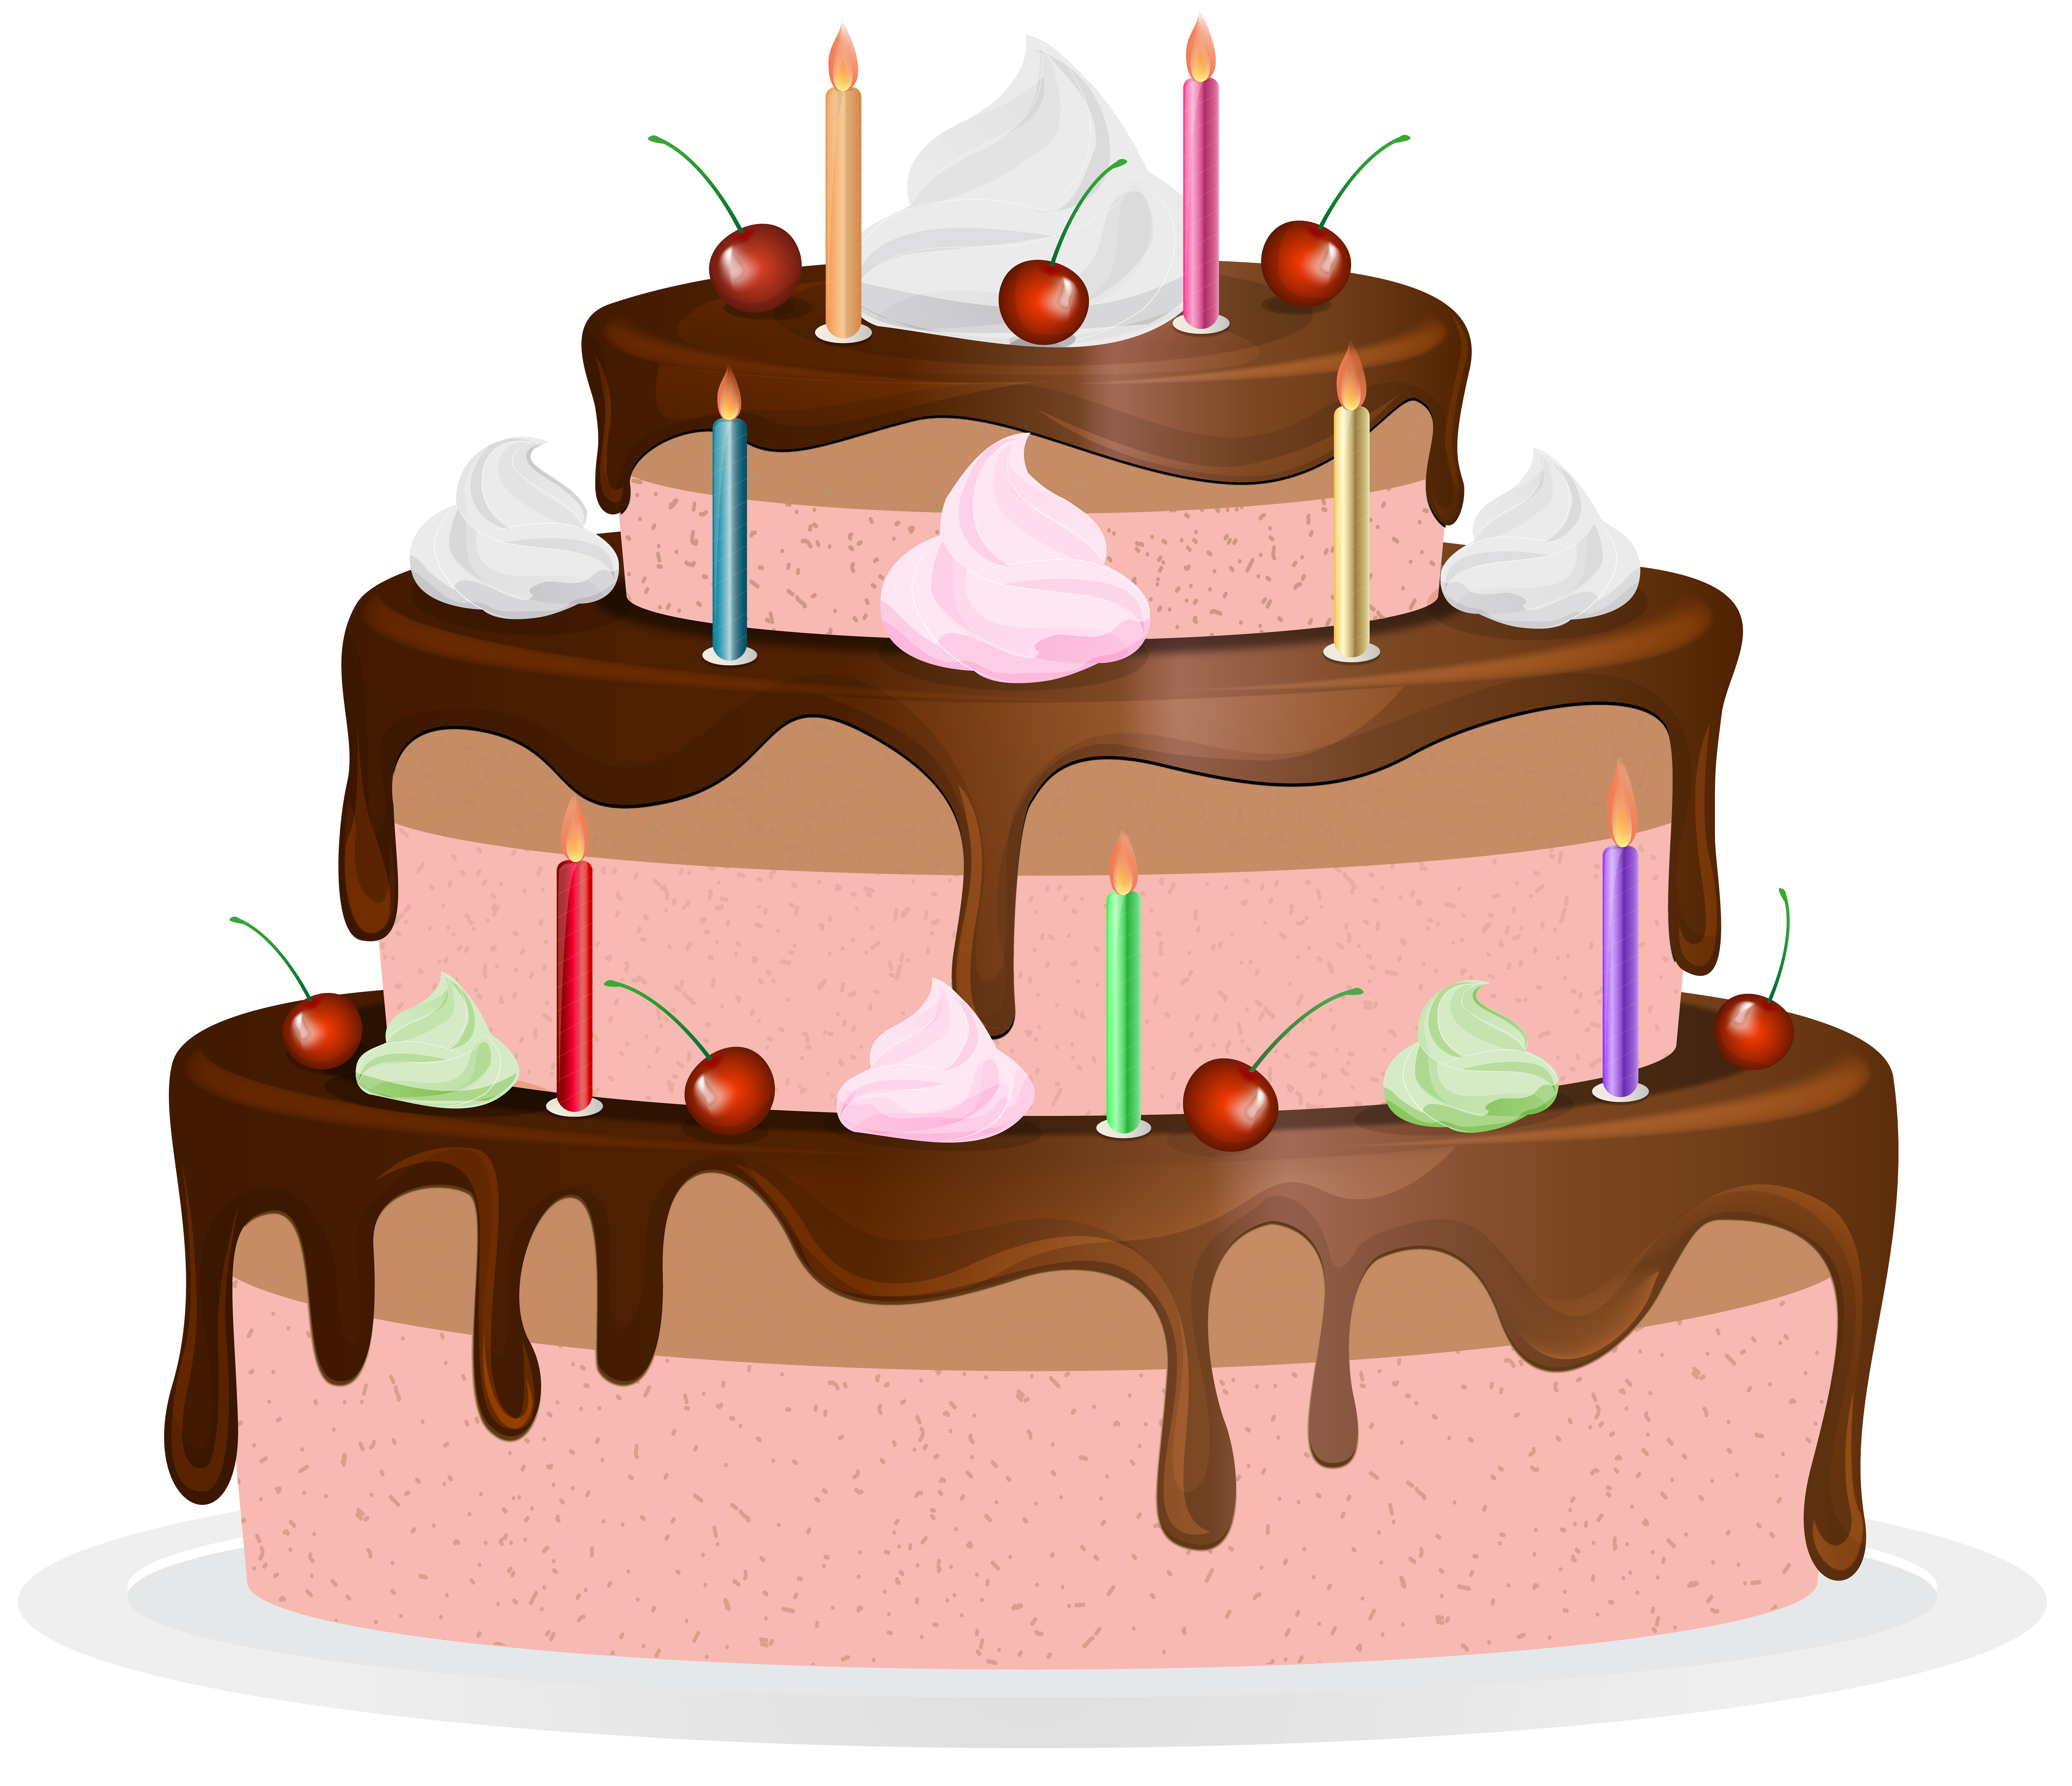 Download Birthday Cake Png Image HQ PNG Image | FreePNGImg